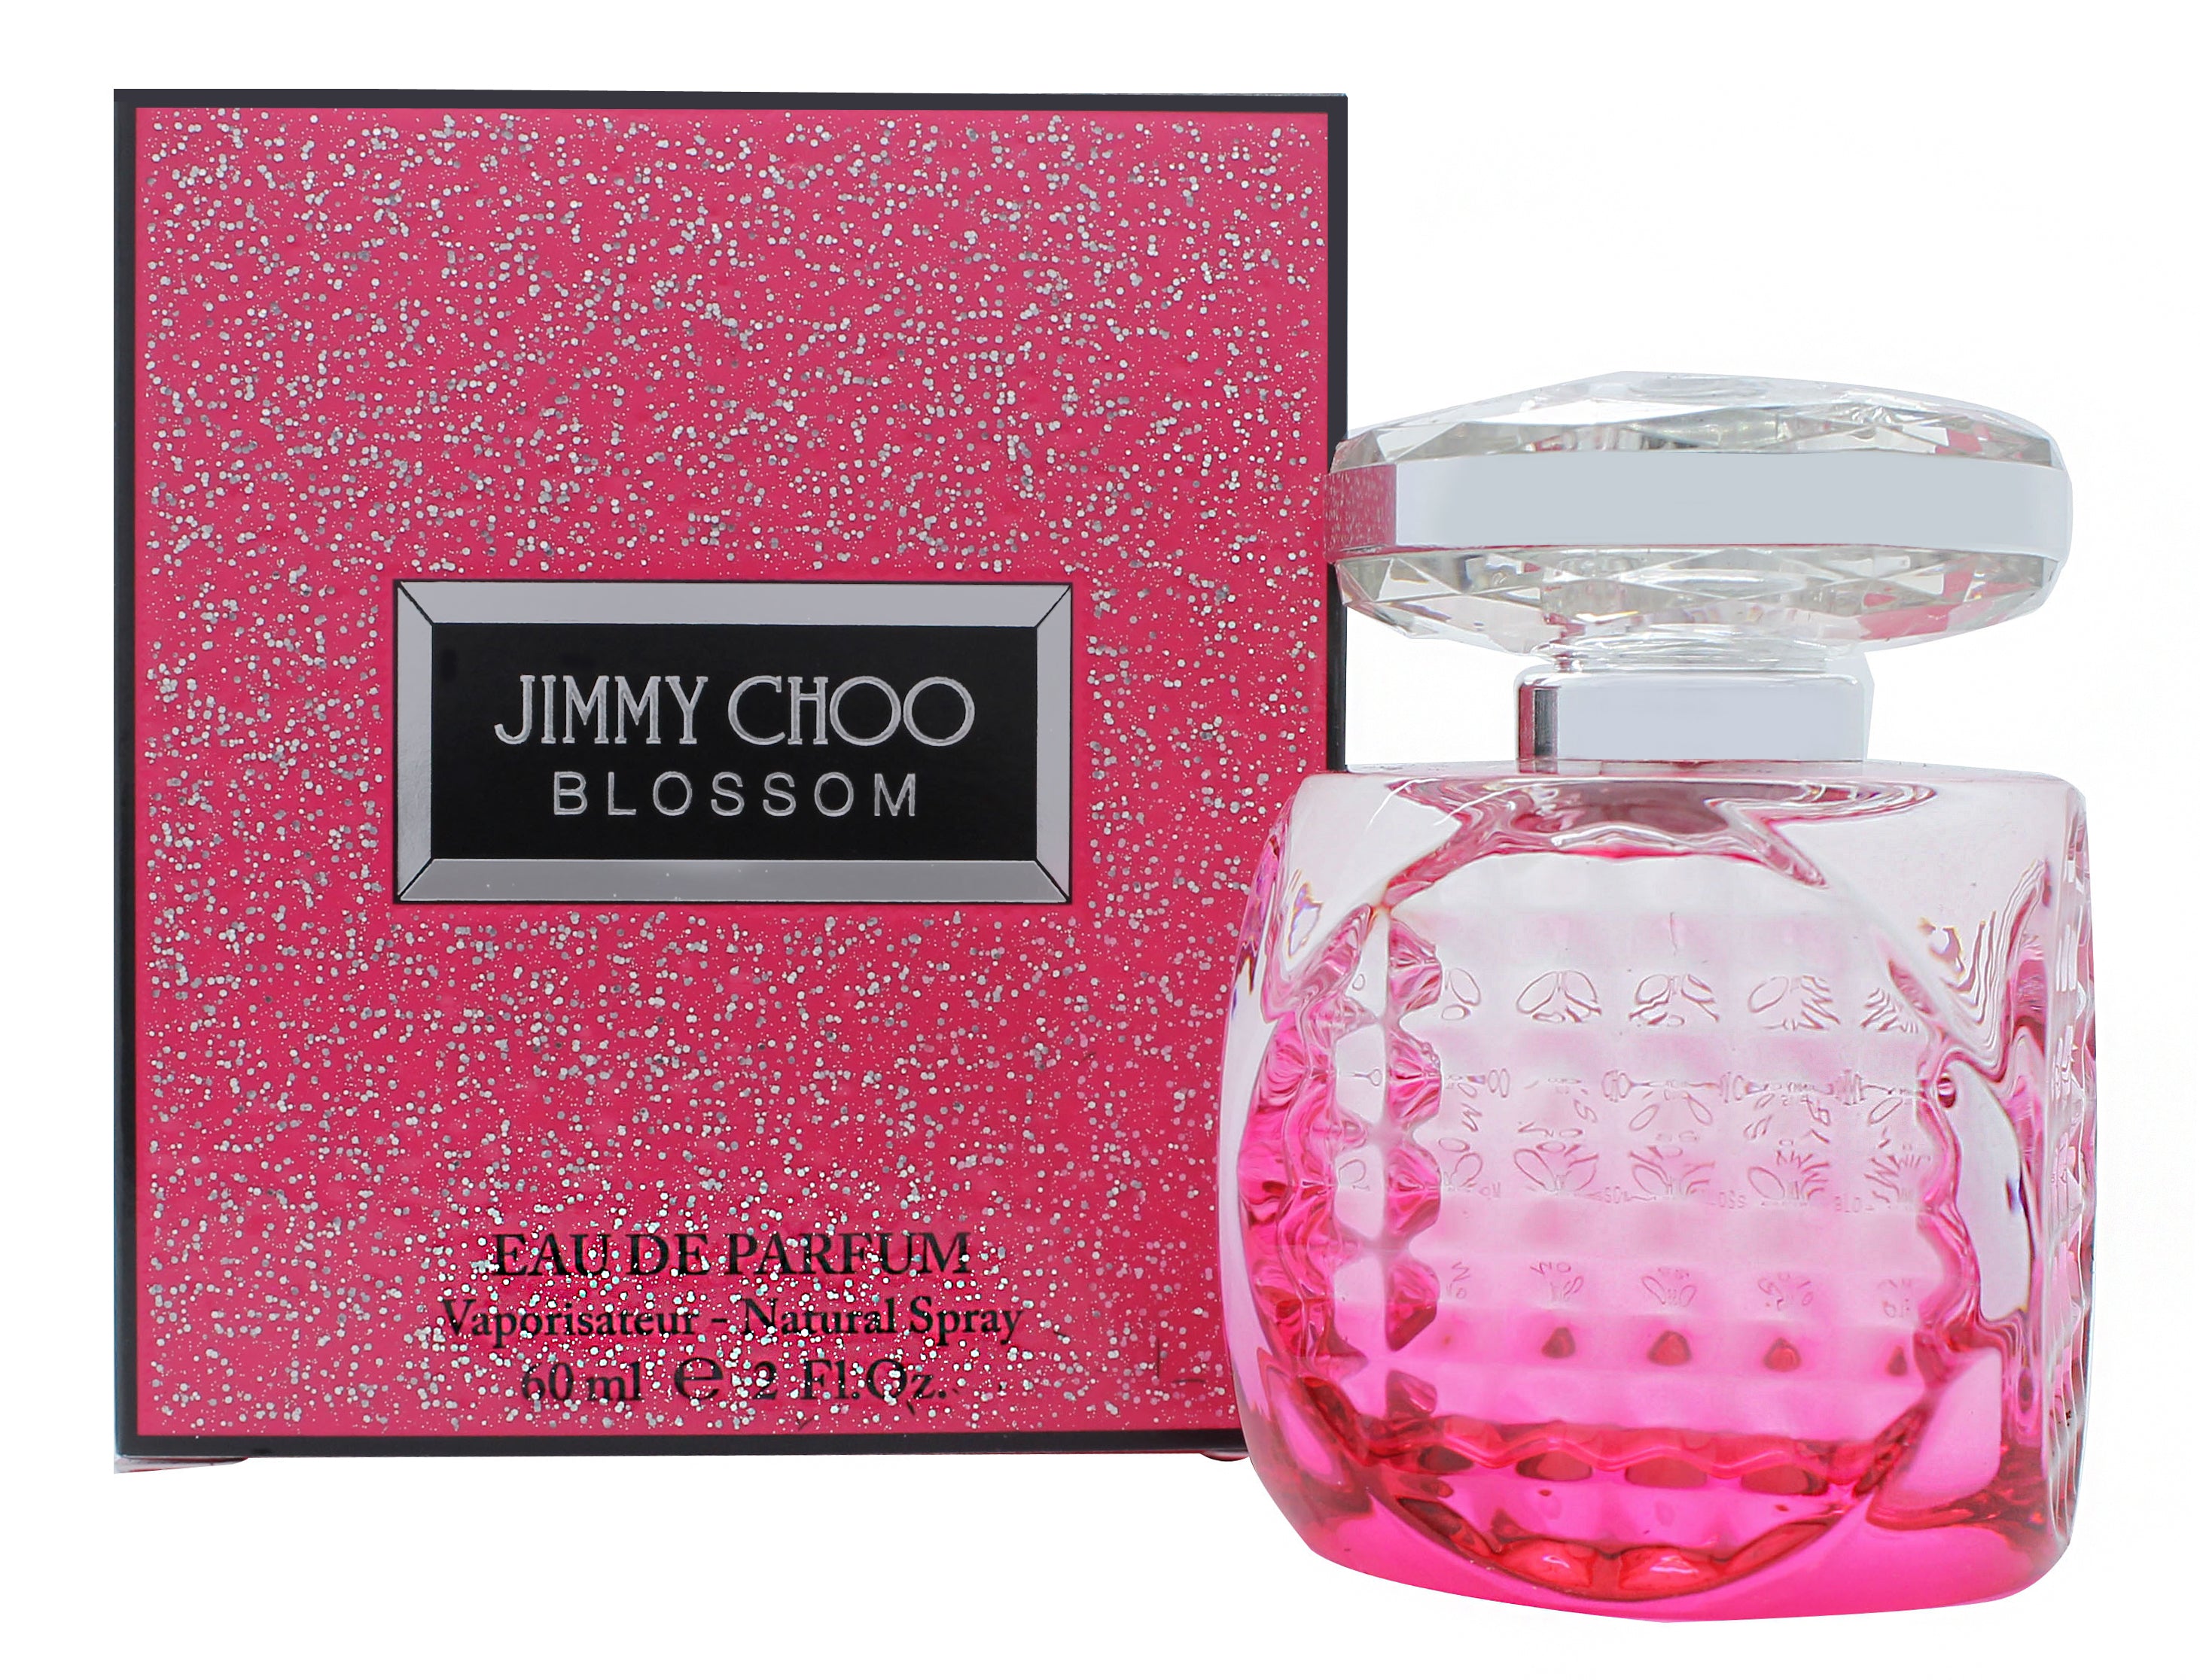 View Jimmy Choo Blossom Eau de Parfum 60ml Spray information